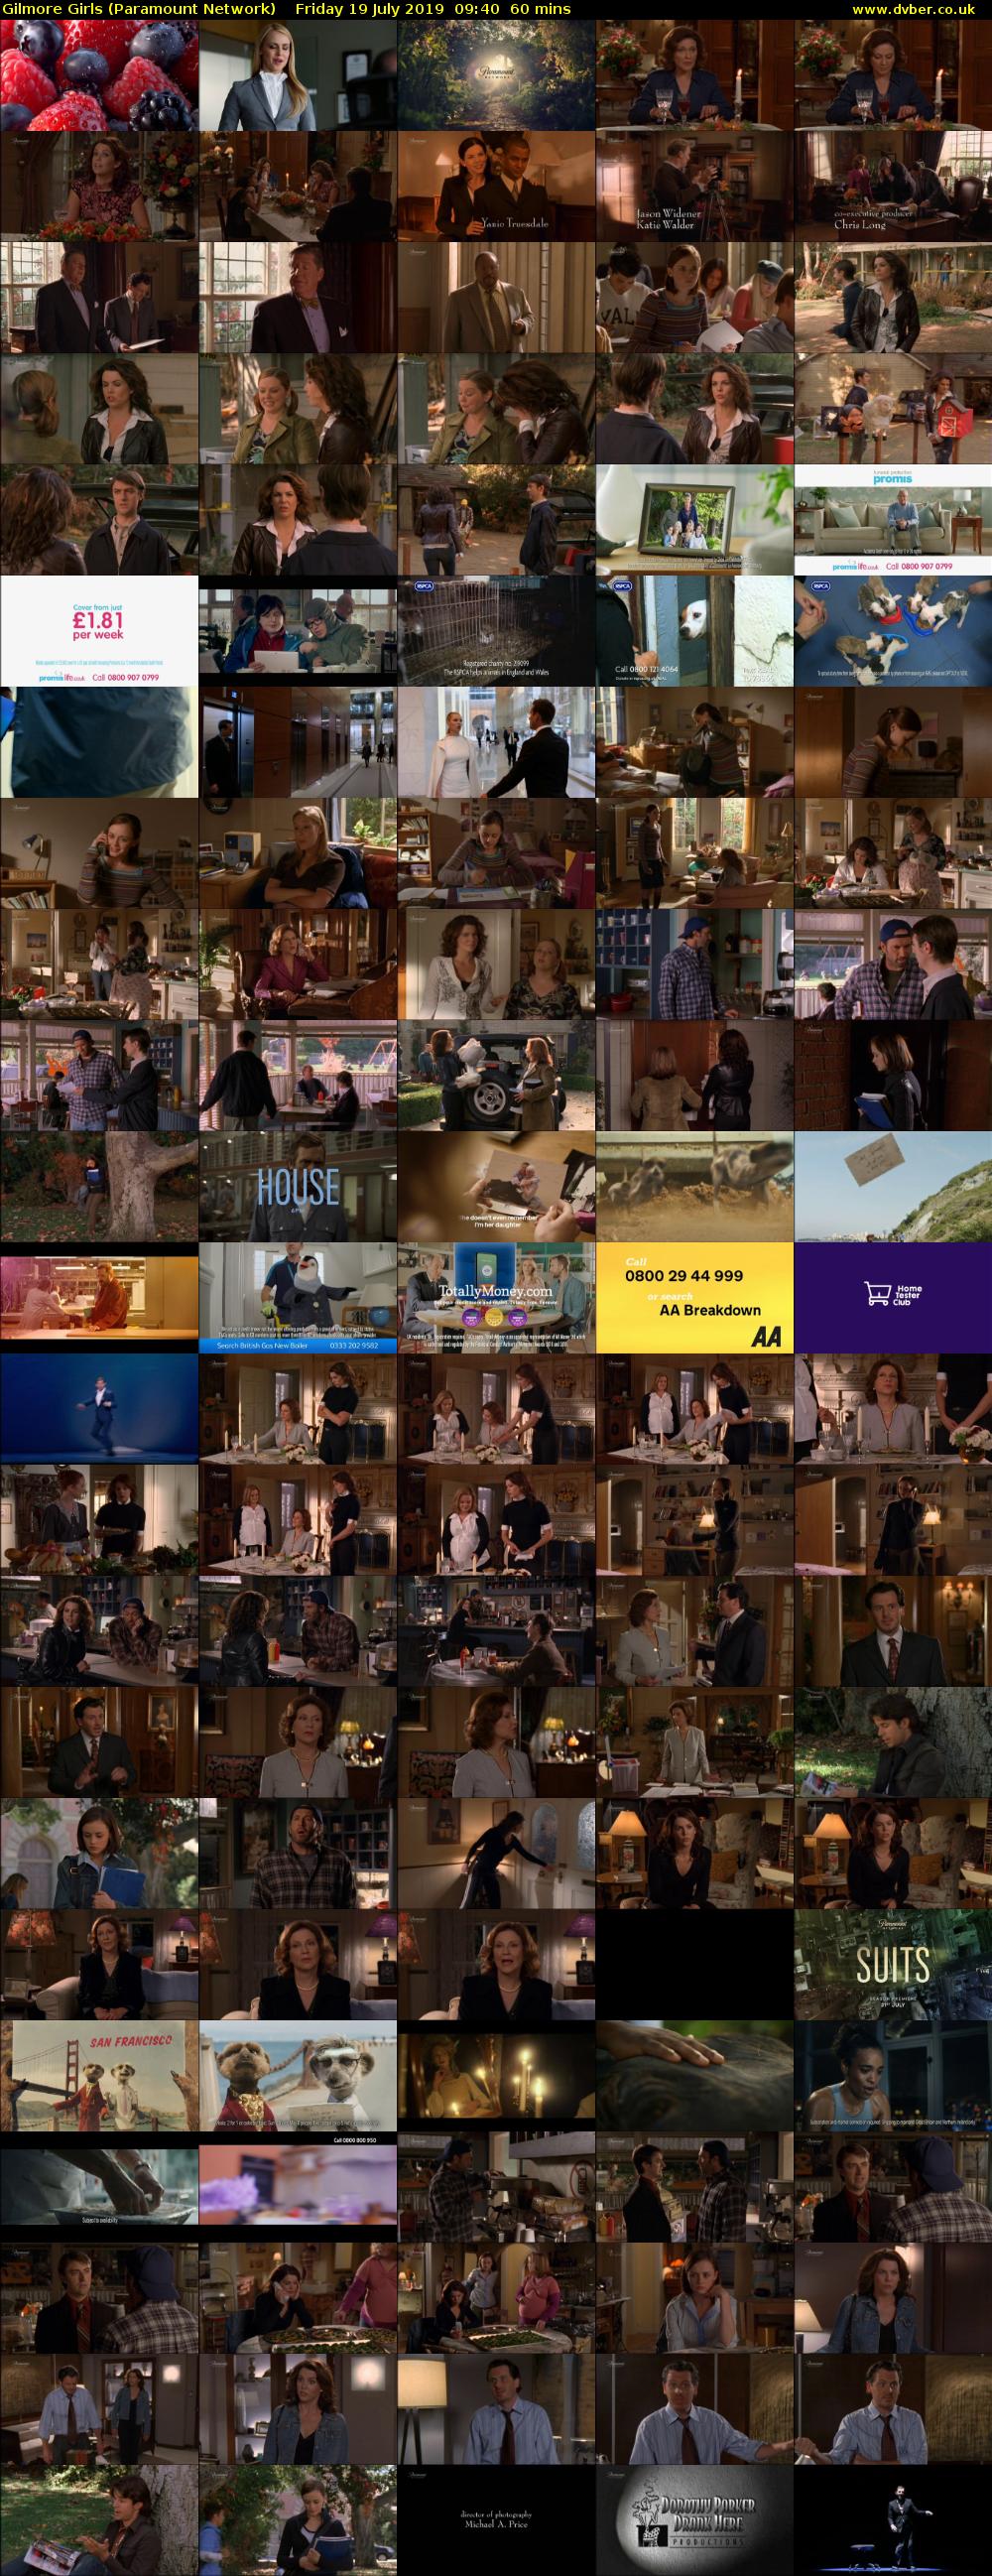 Gilmore Girls (Paramount Network) Friday 19 July 2019 09:40 - 10:40